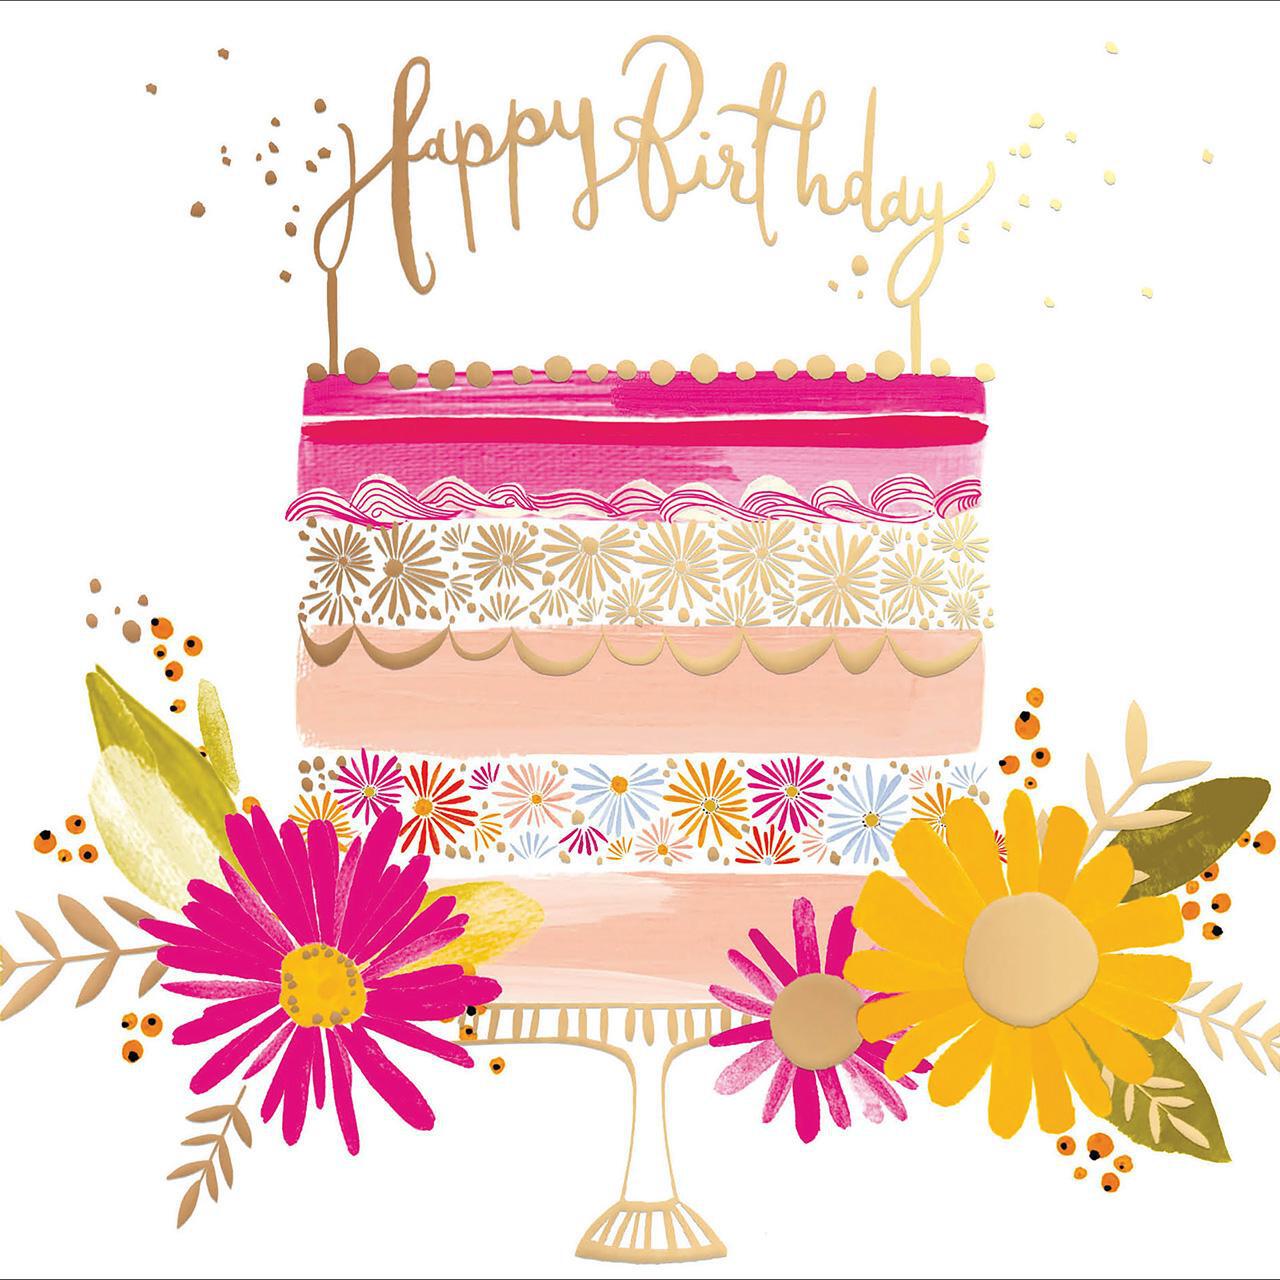 Pink Layers of Joy Birthday Card